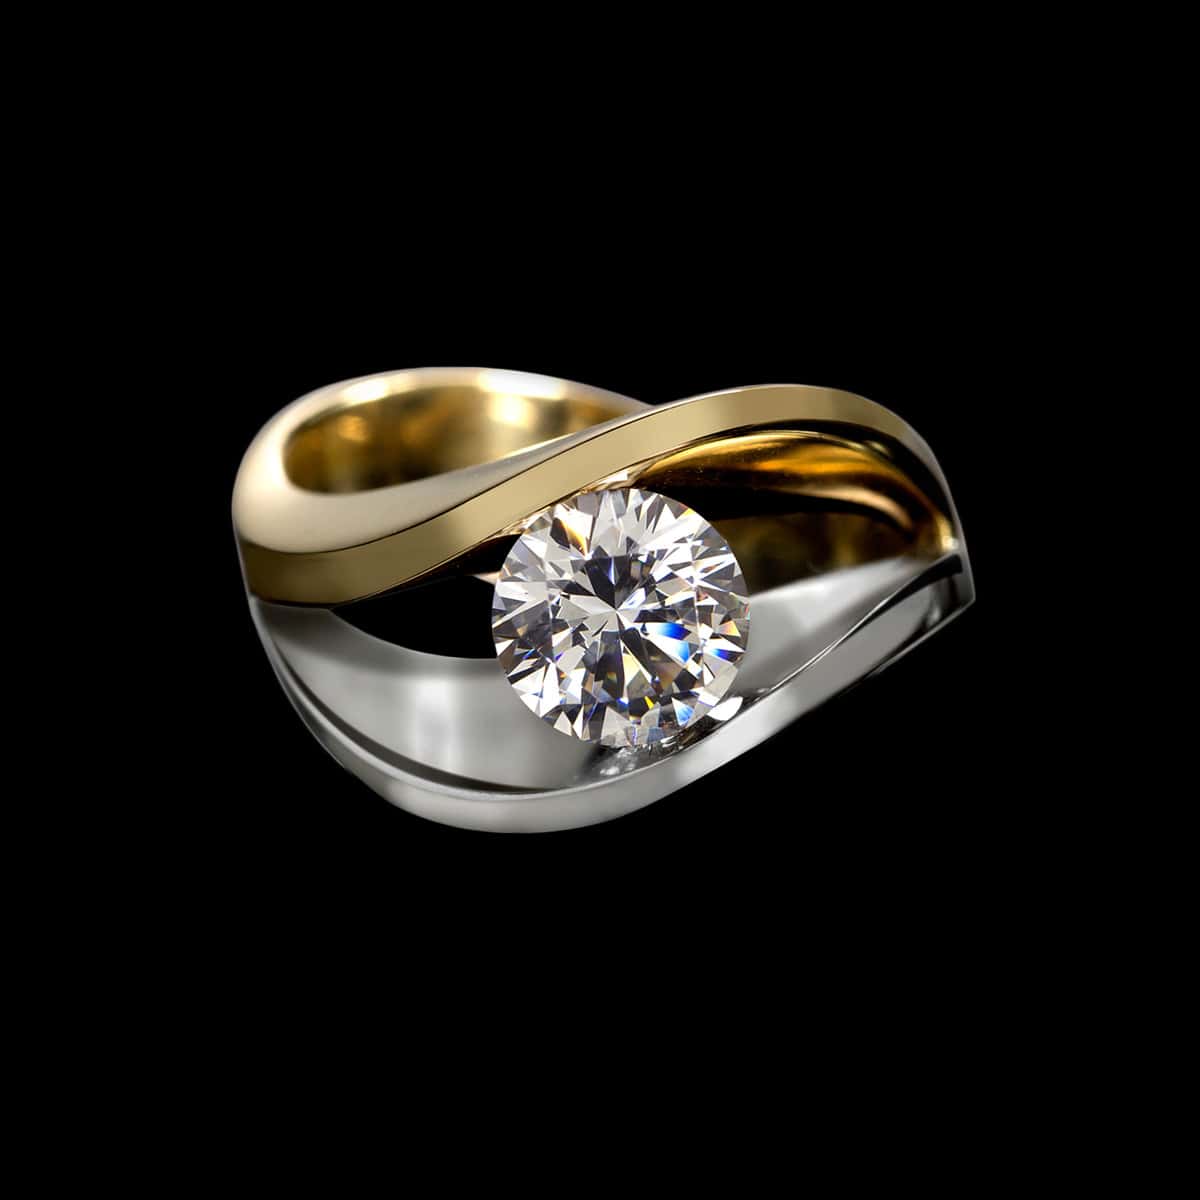 Diamond Ring Designs 2021 : Latest Diamond Ring Designs 2021#💎💍 ...